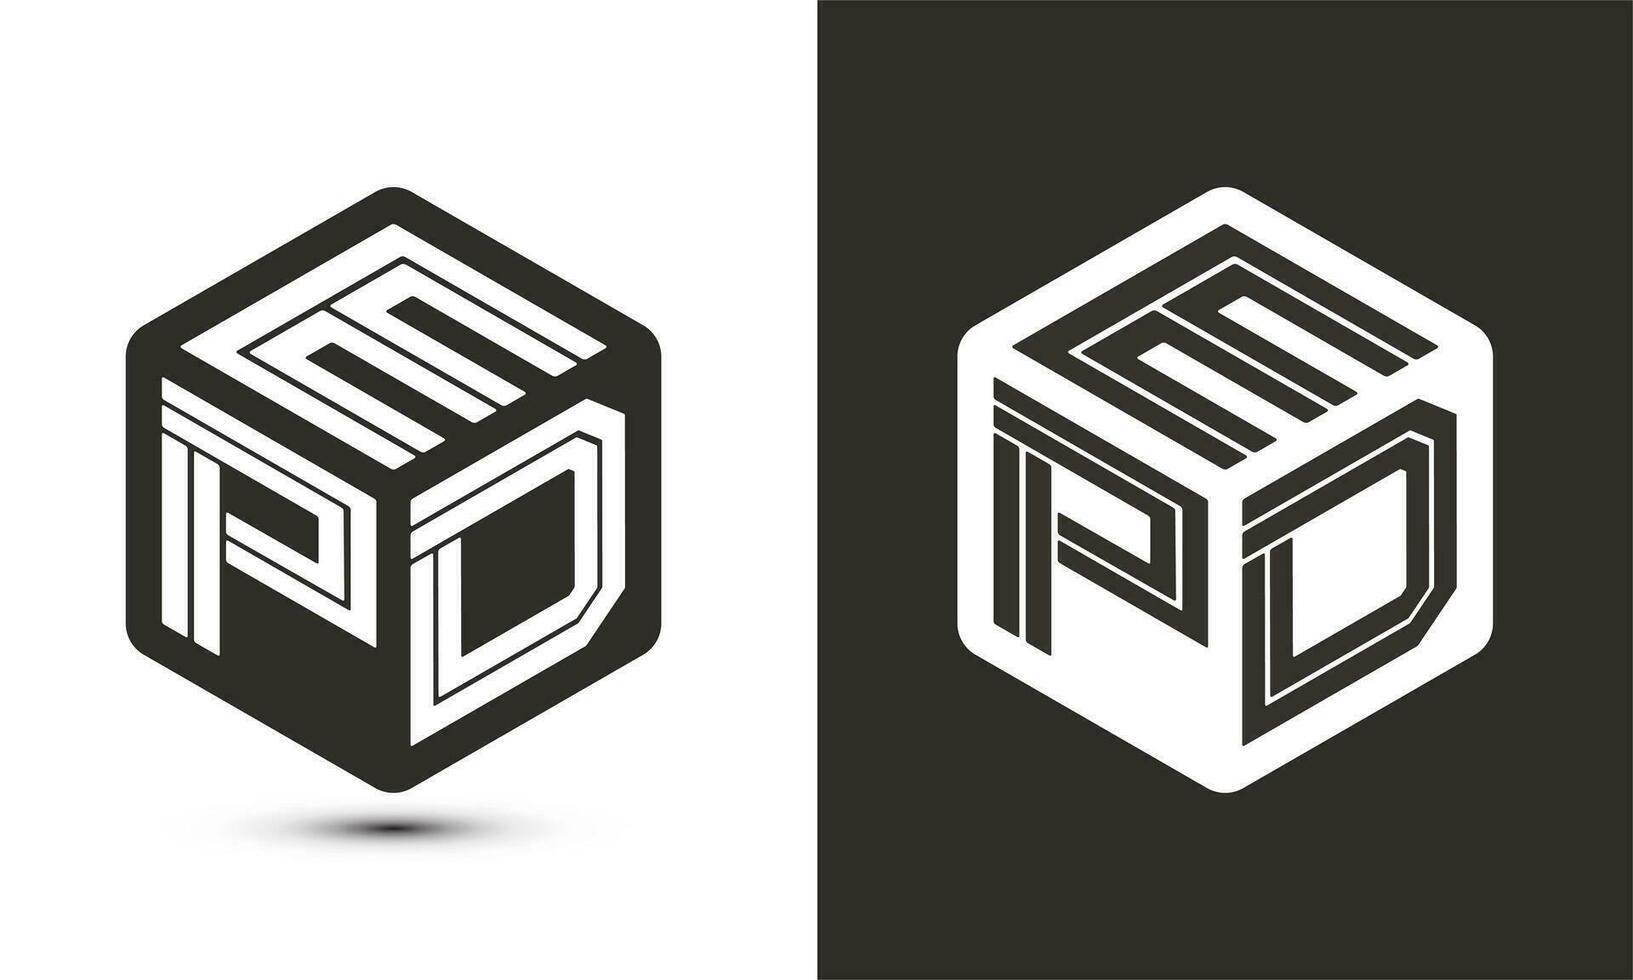 epd letra logo diseño con ilustrador cubo logo, vector logo moderno alfabeto fuente superposición estilo.